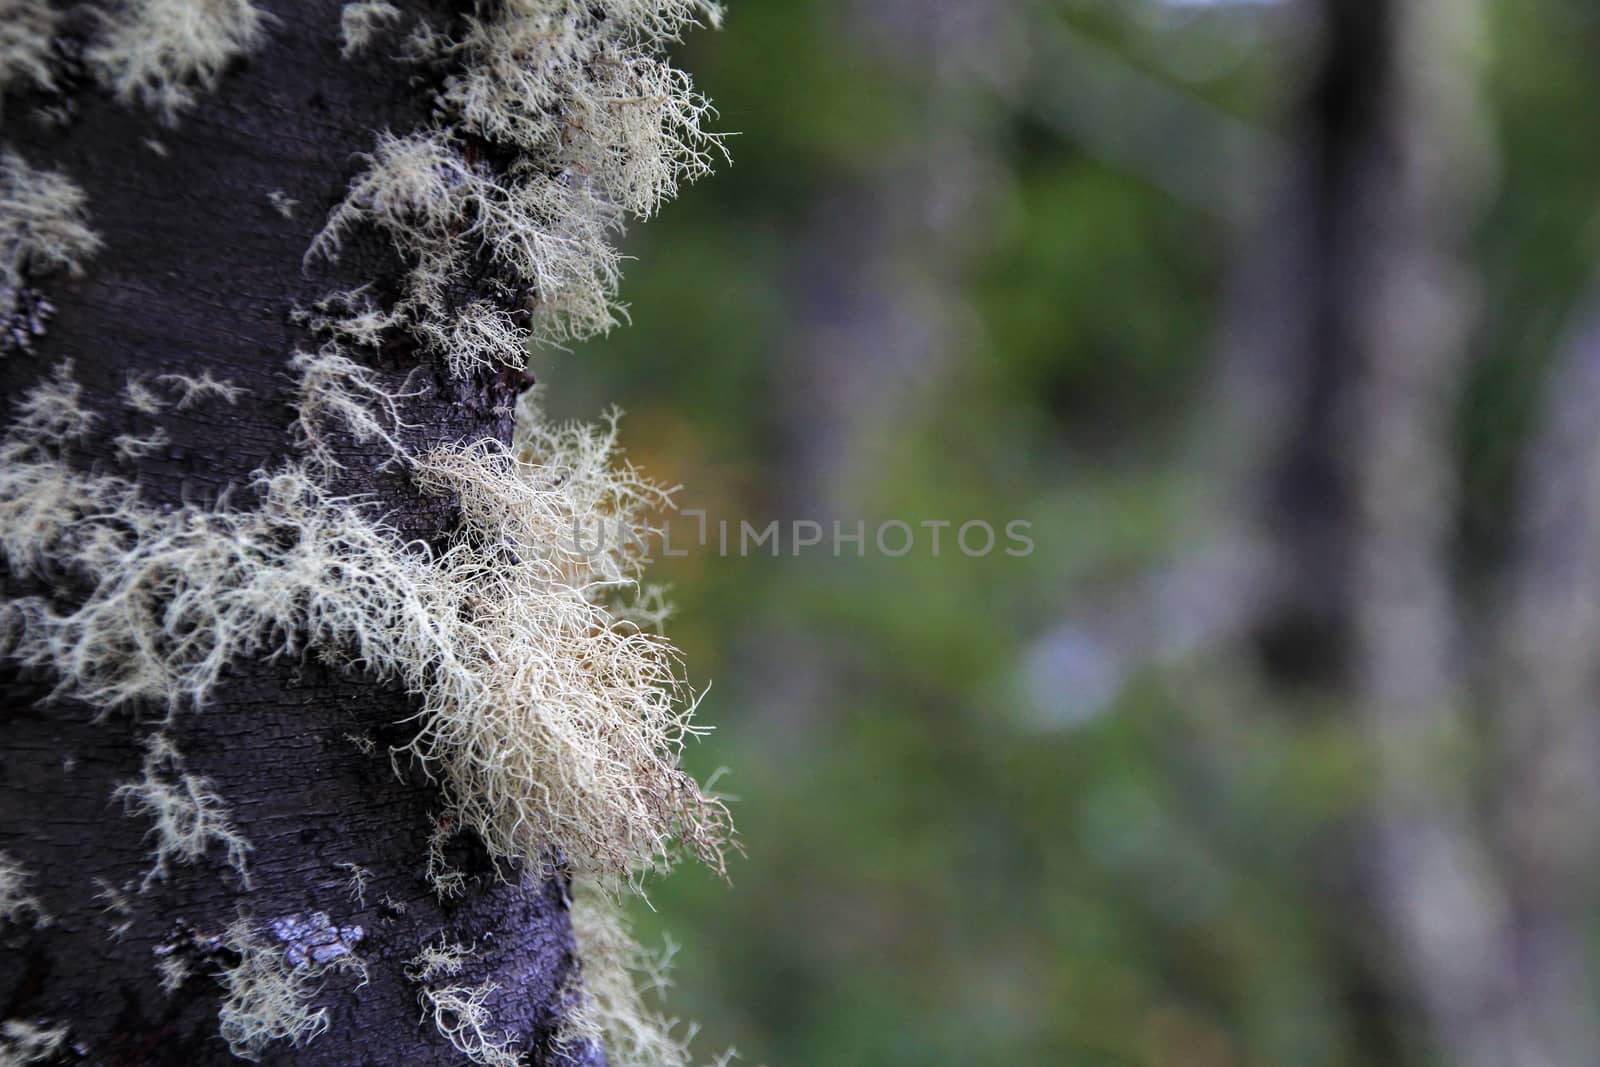 Lenga beech tree forest, Nothofagus Pumilio, Reserva Nacional Laguna Parrillar, near Punta Arenas, Patagonia, Chile